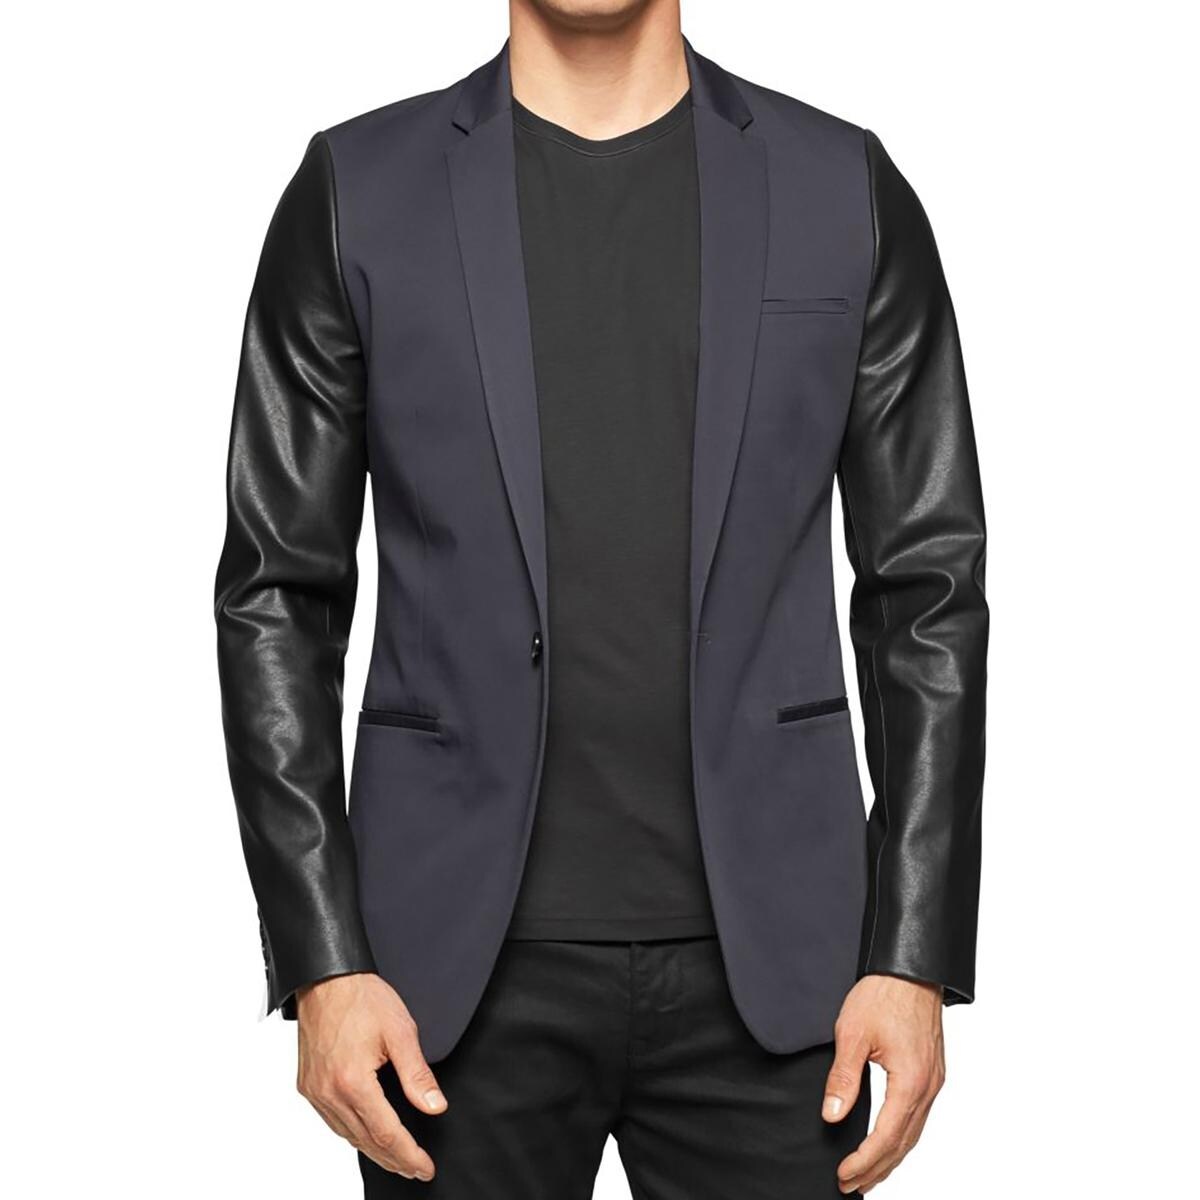 calvin klein faux leather sleeve jacket